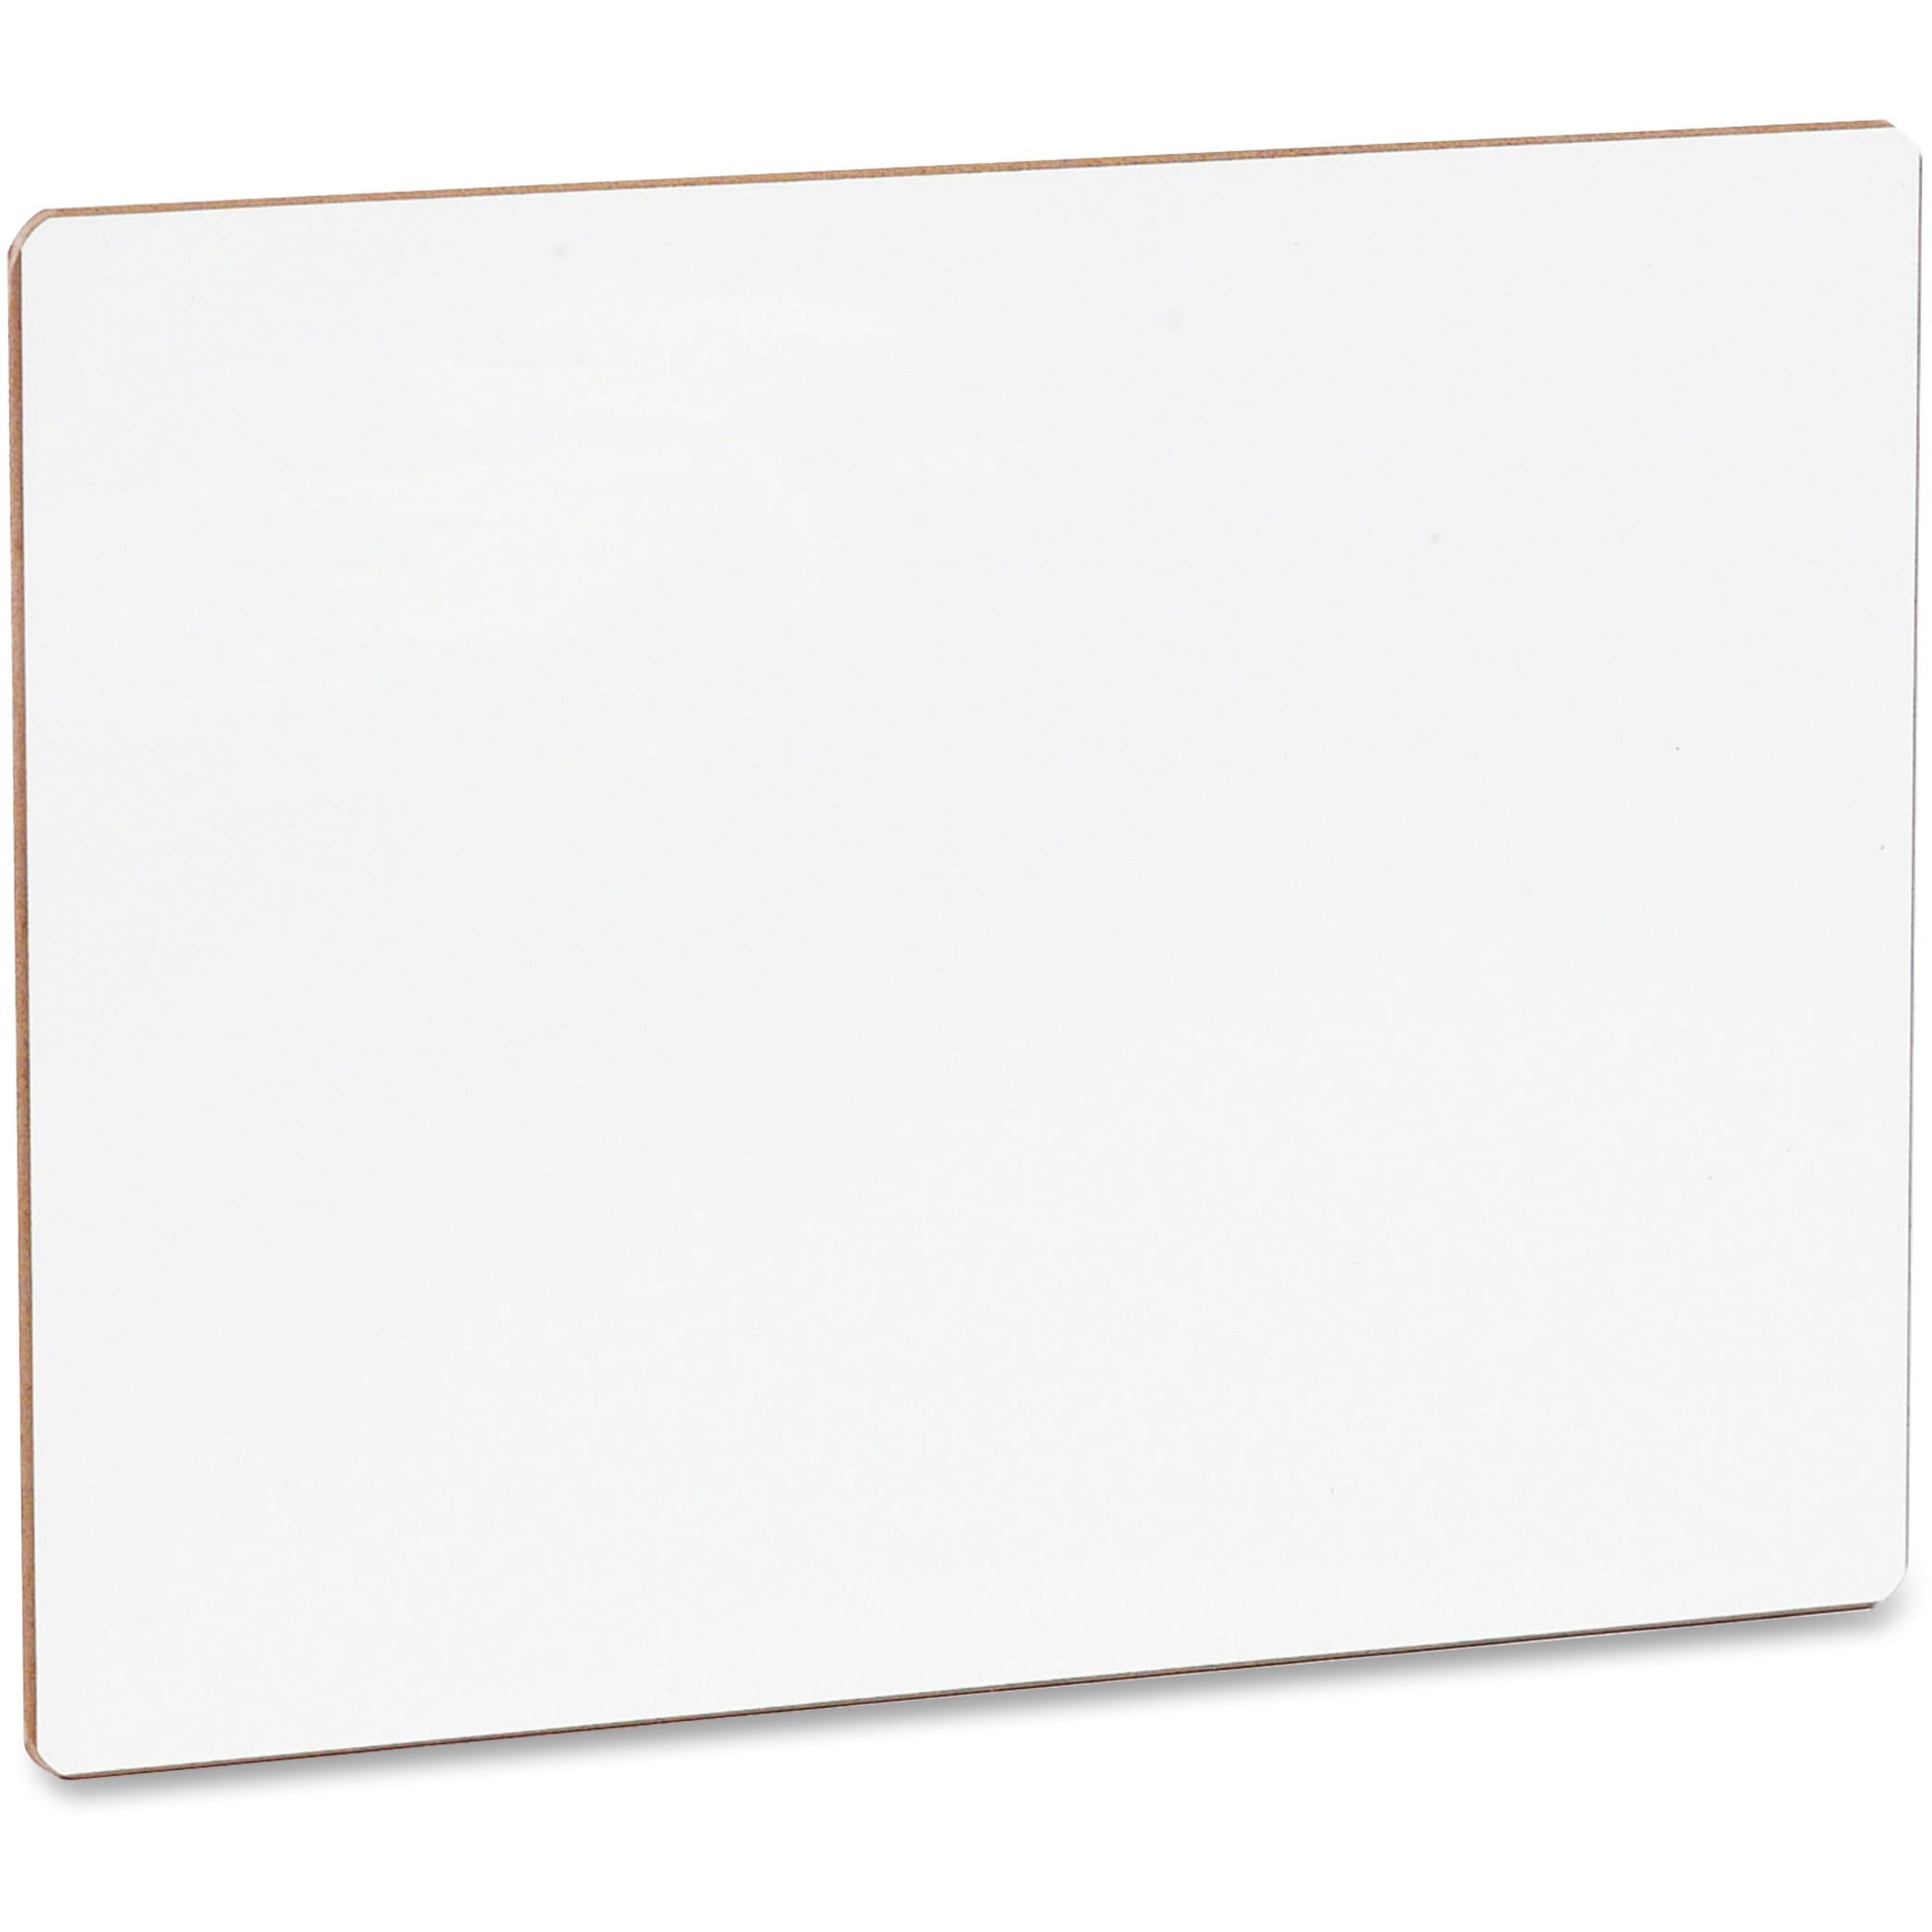 Dry Erase White Board Sheet/Film-Gloss Whiteboard Sticker Writing Film 45cmx60cm 